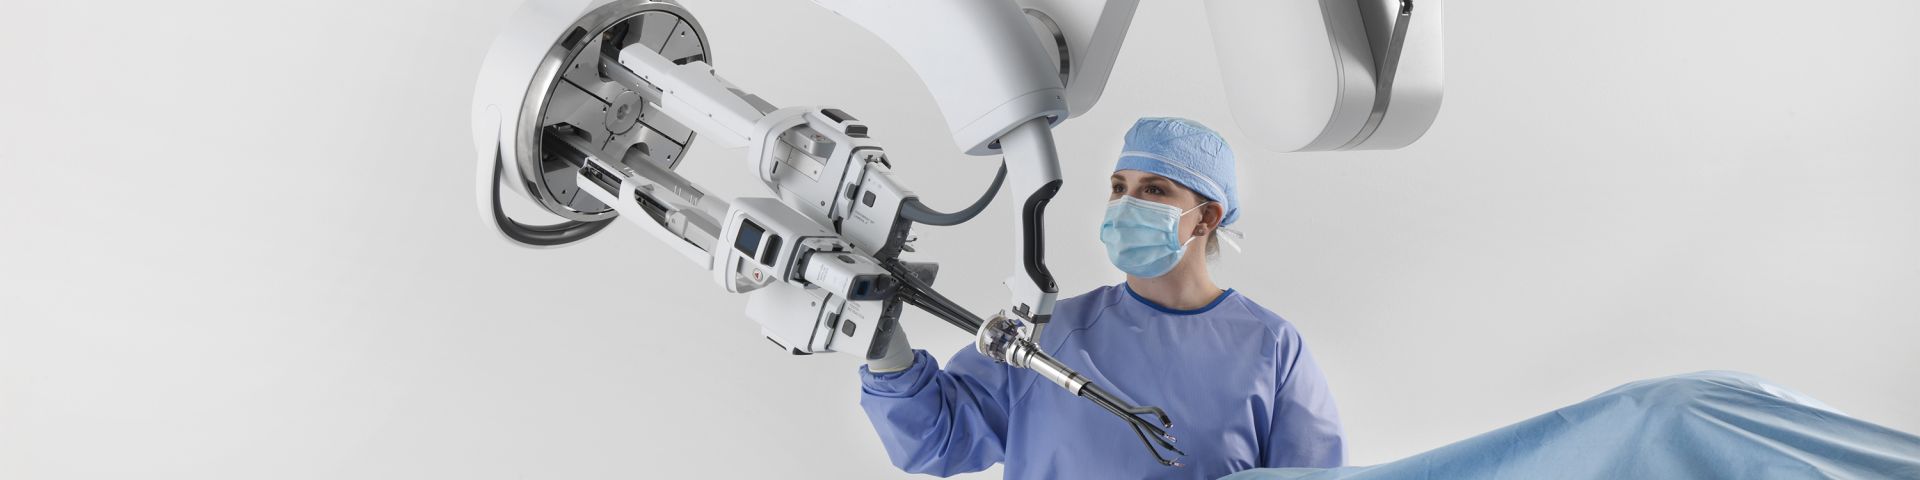 Intuitive da vinci sp surgical system and technician 1060861 hi res